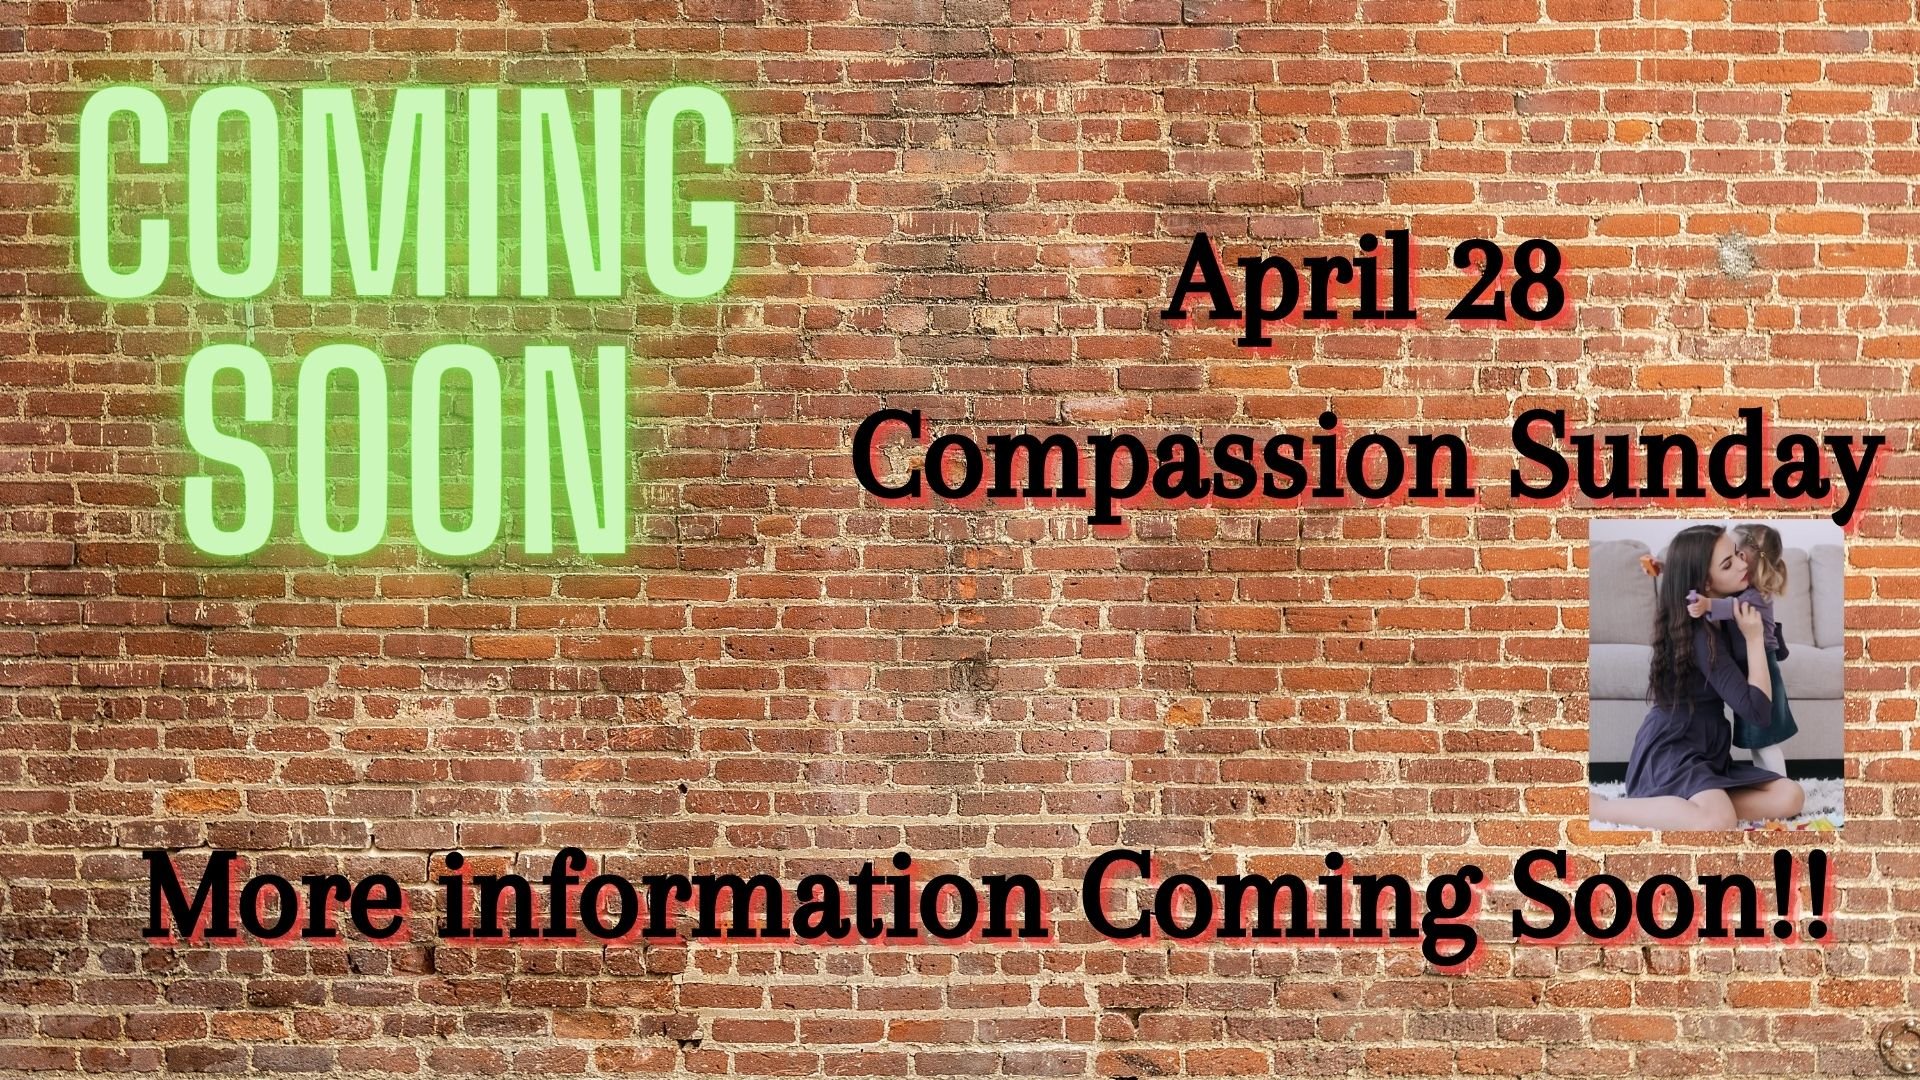 681 April 28 Compassion Sunday.jpg